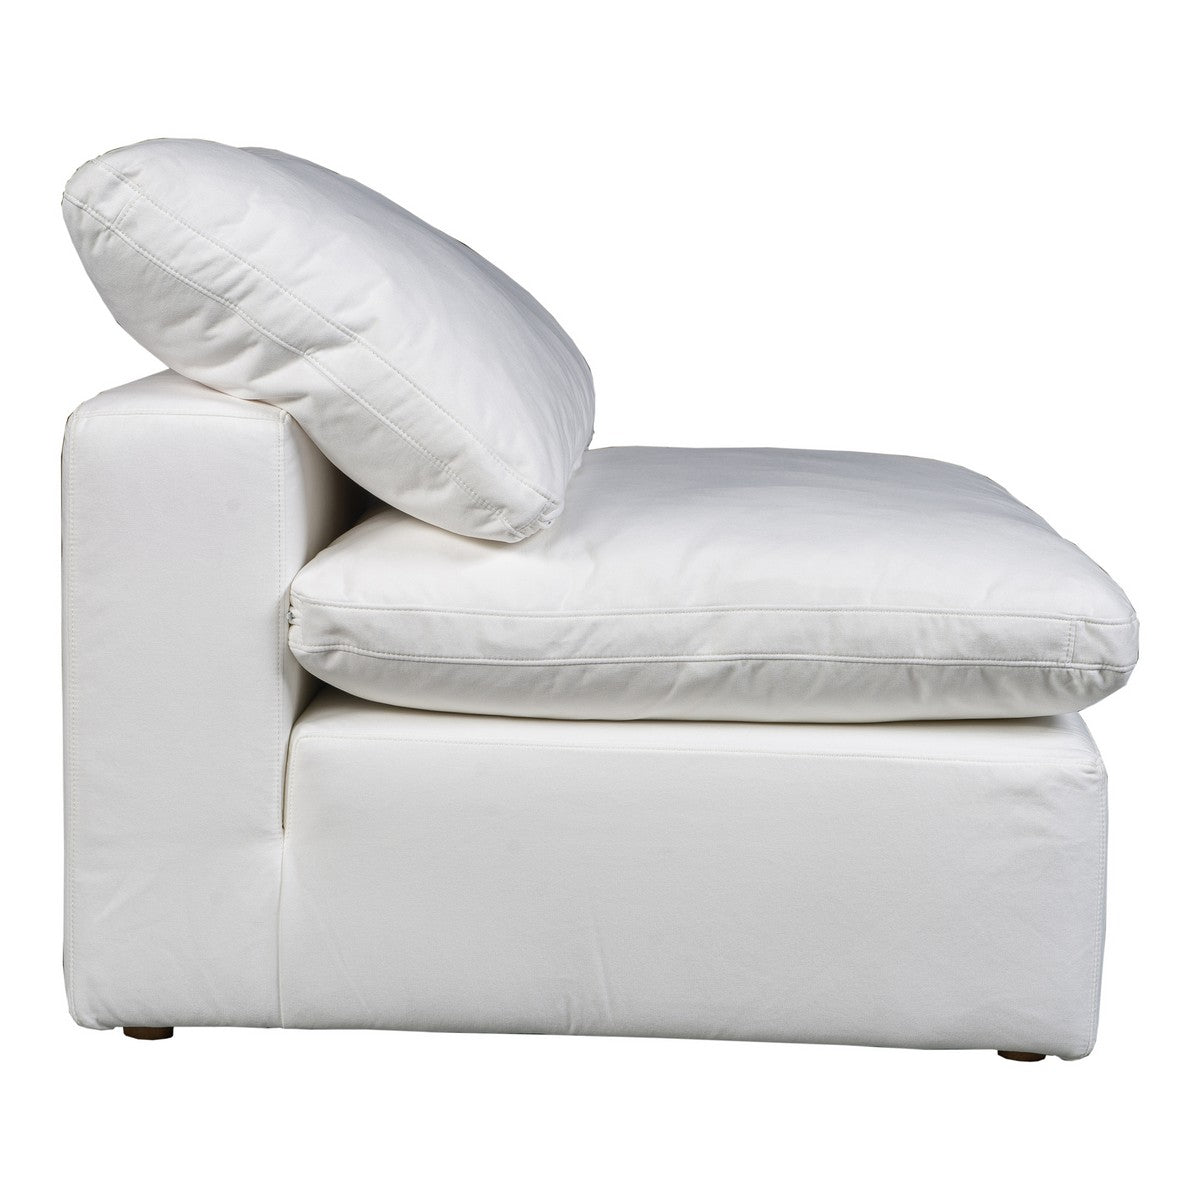 Moe's Home Collection Terra Condo Slipper Chair Livesmart Fabric Cream - YJ-1013-05